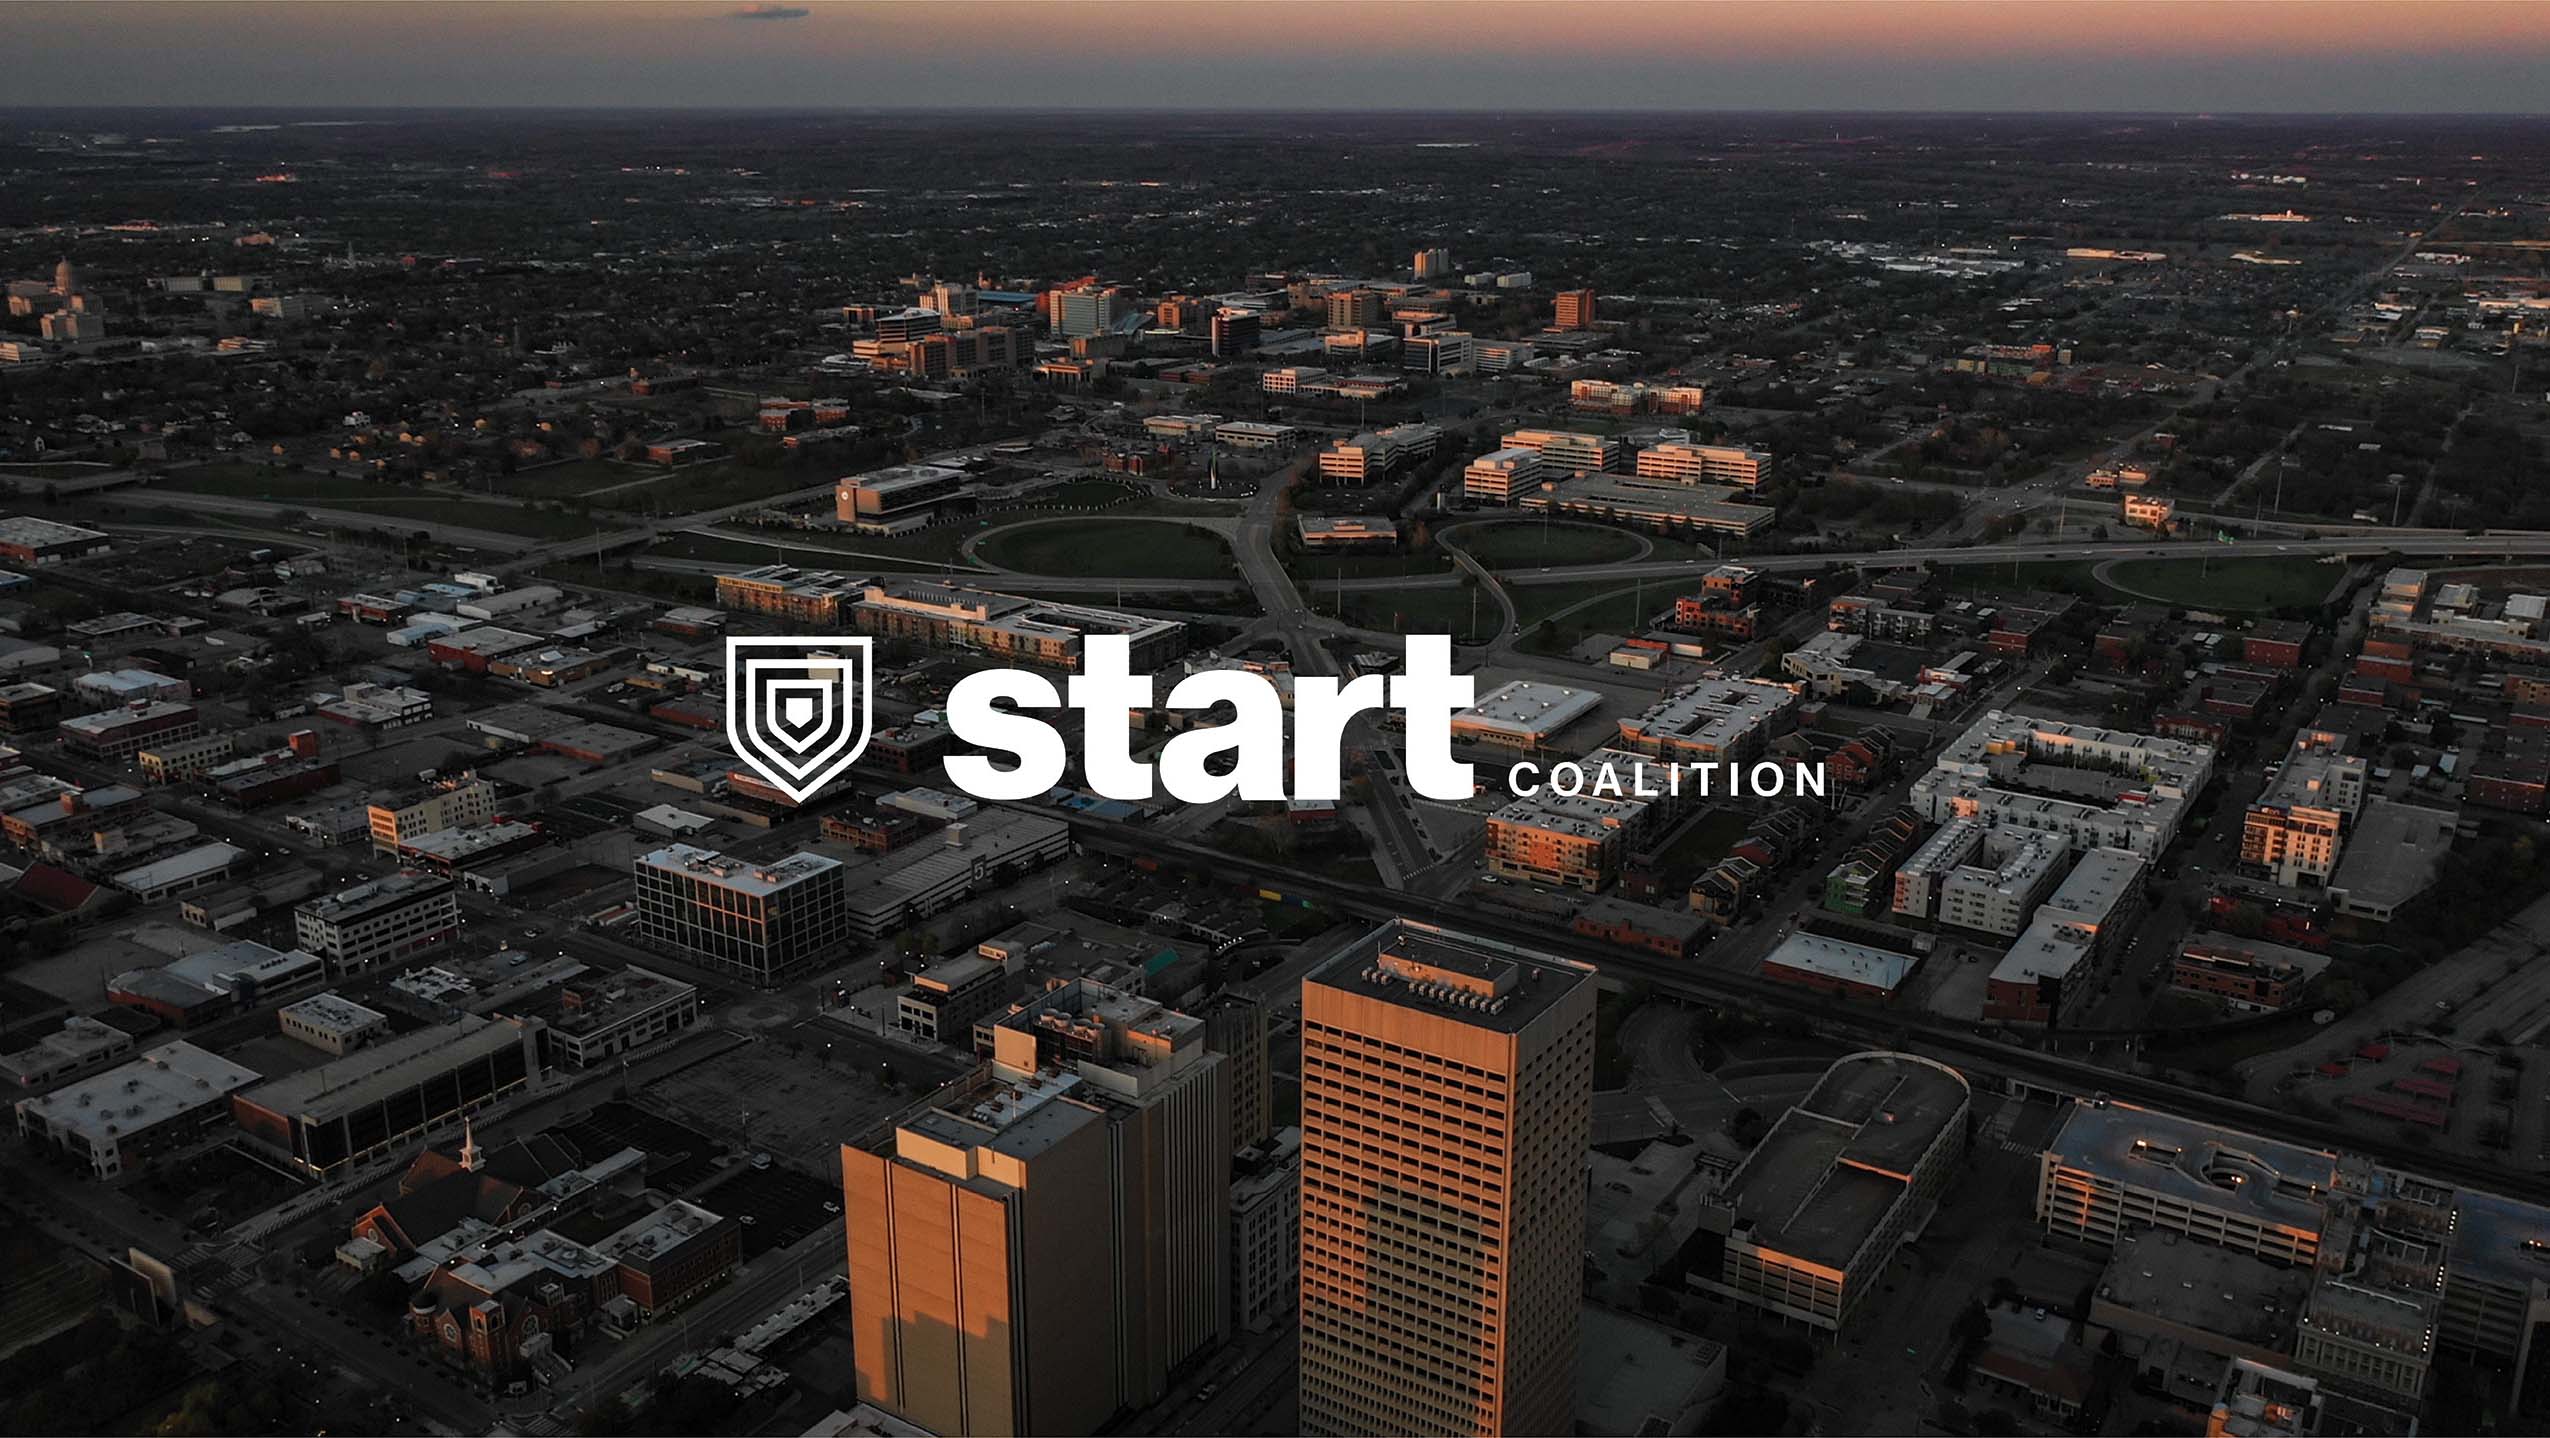 Start Coalition in Oklahoma City